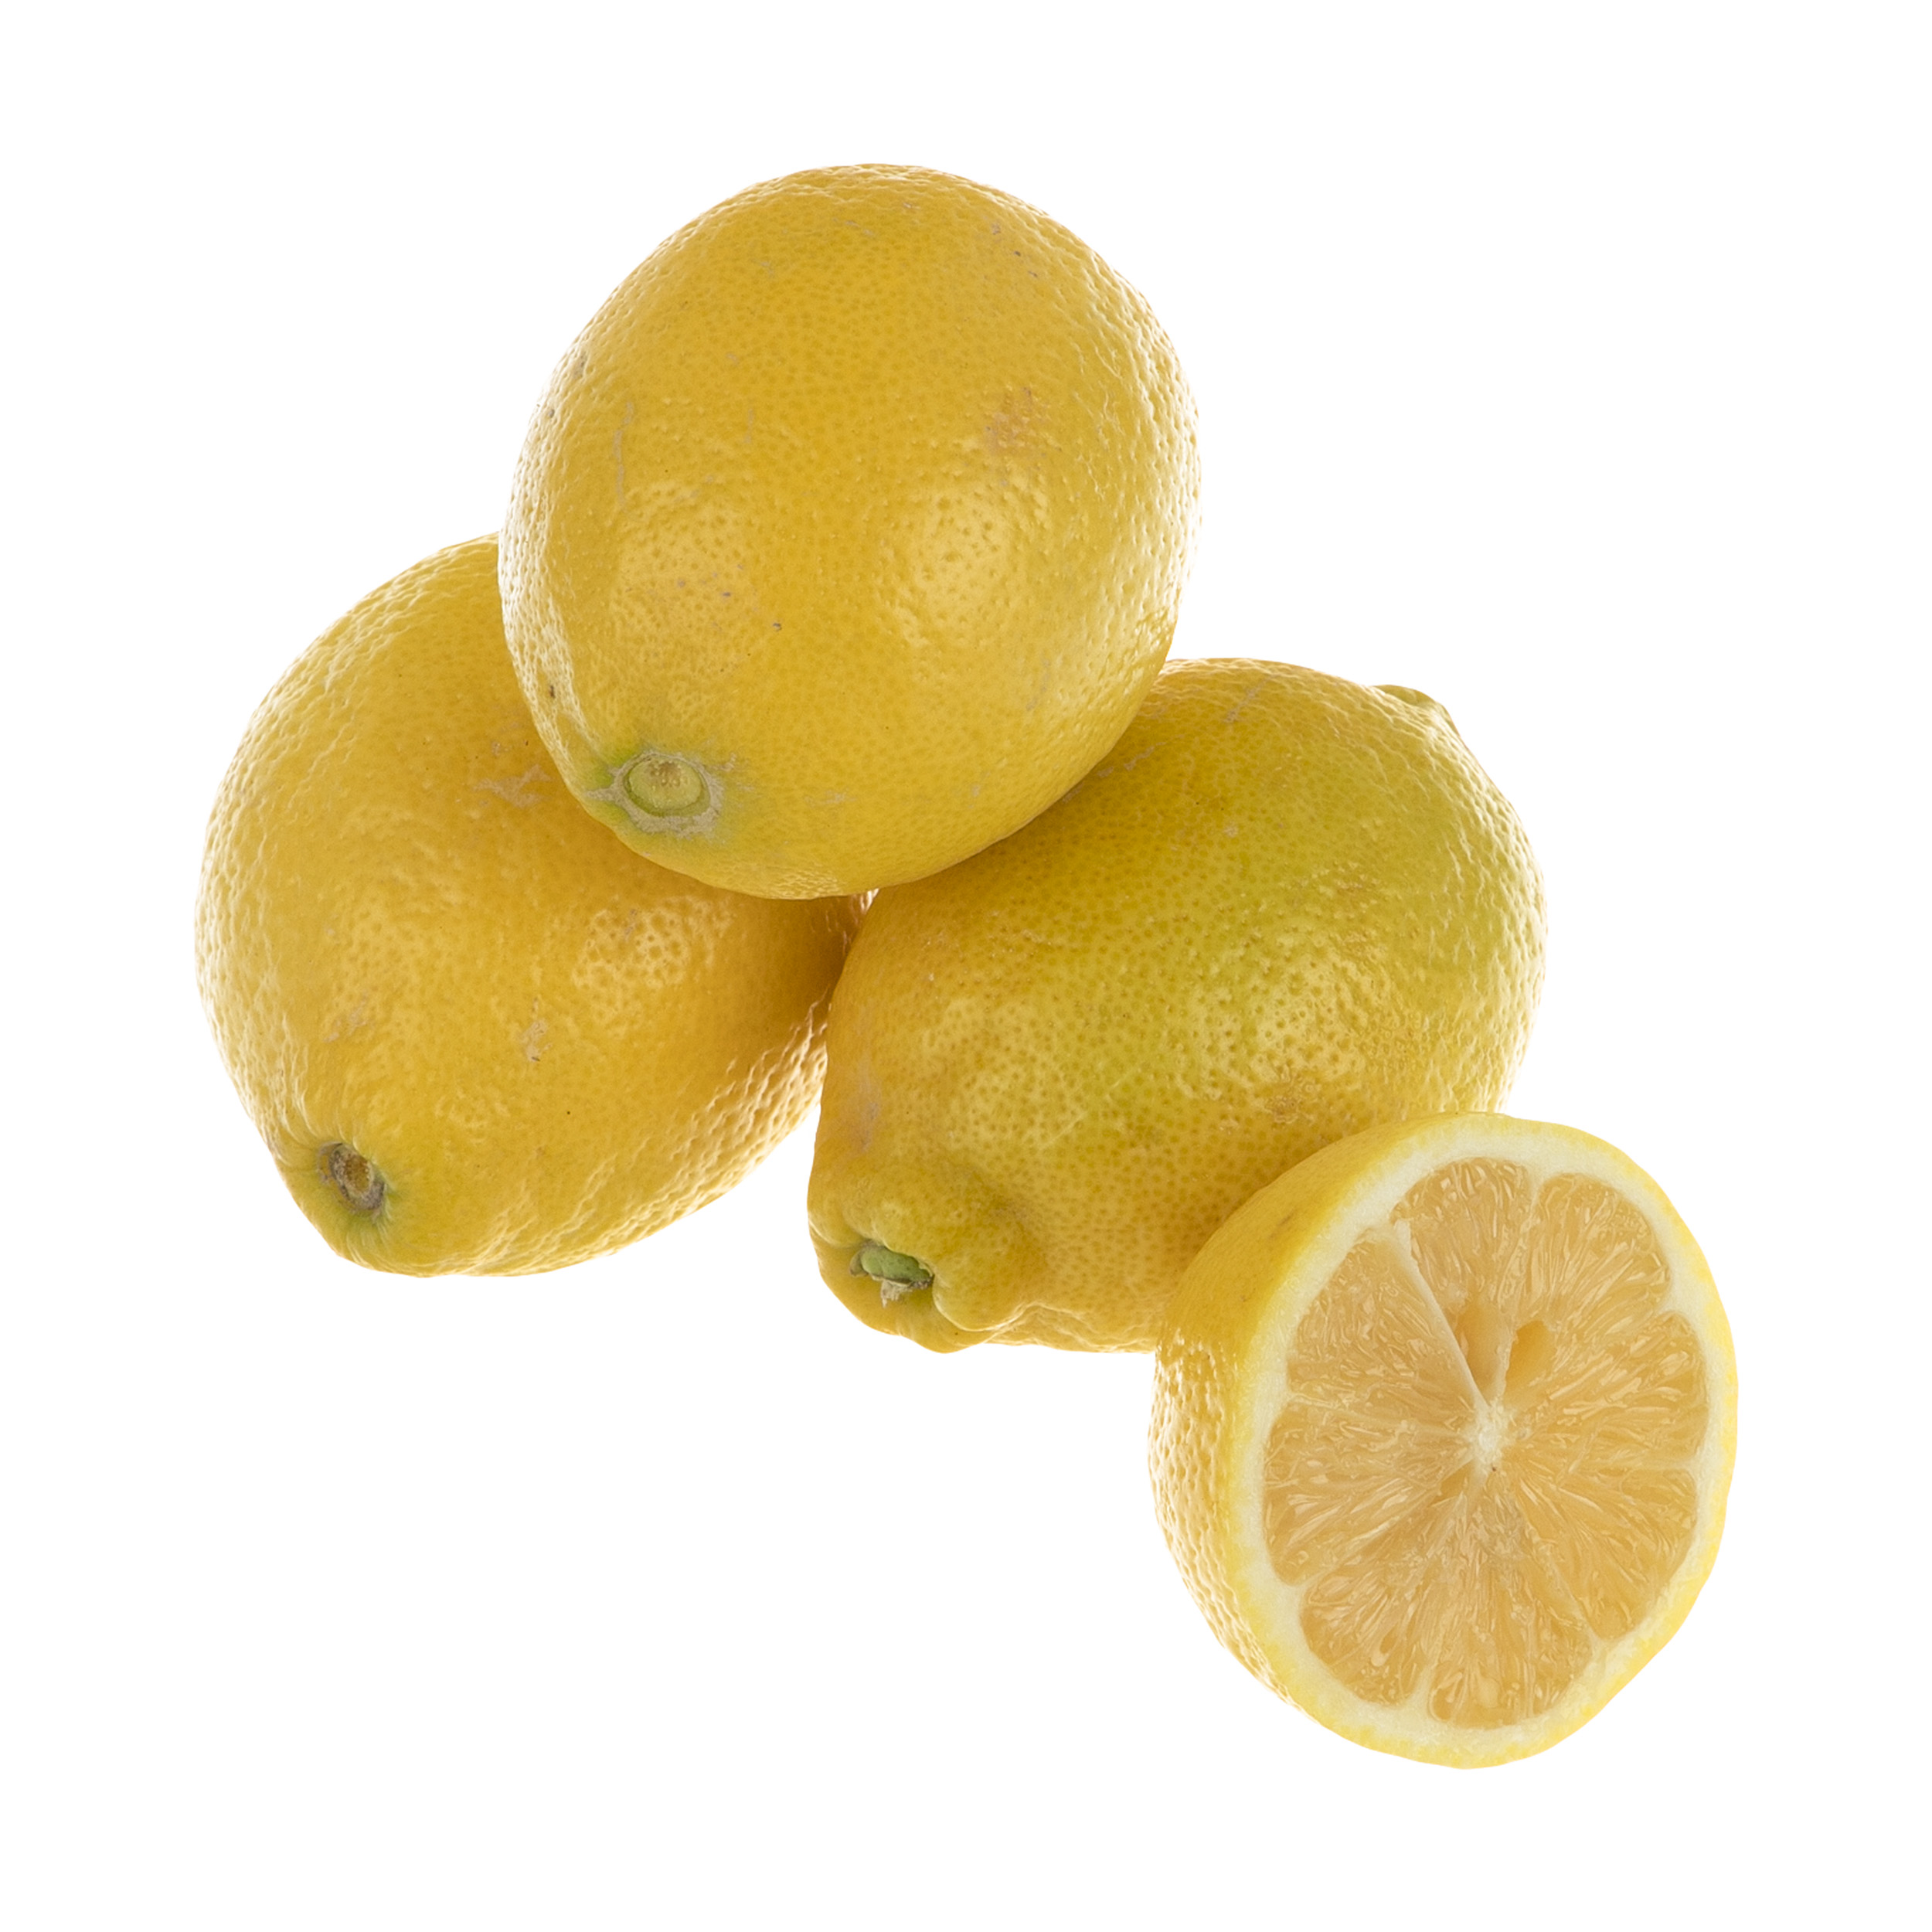 لیمو ترش سنگی درجه یک - 3 کیلوگرم